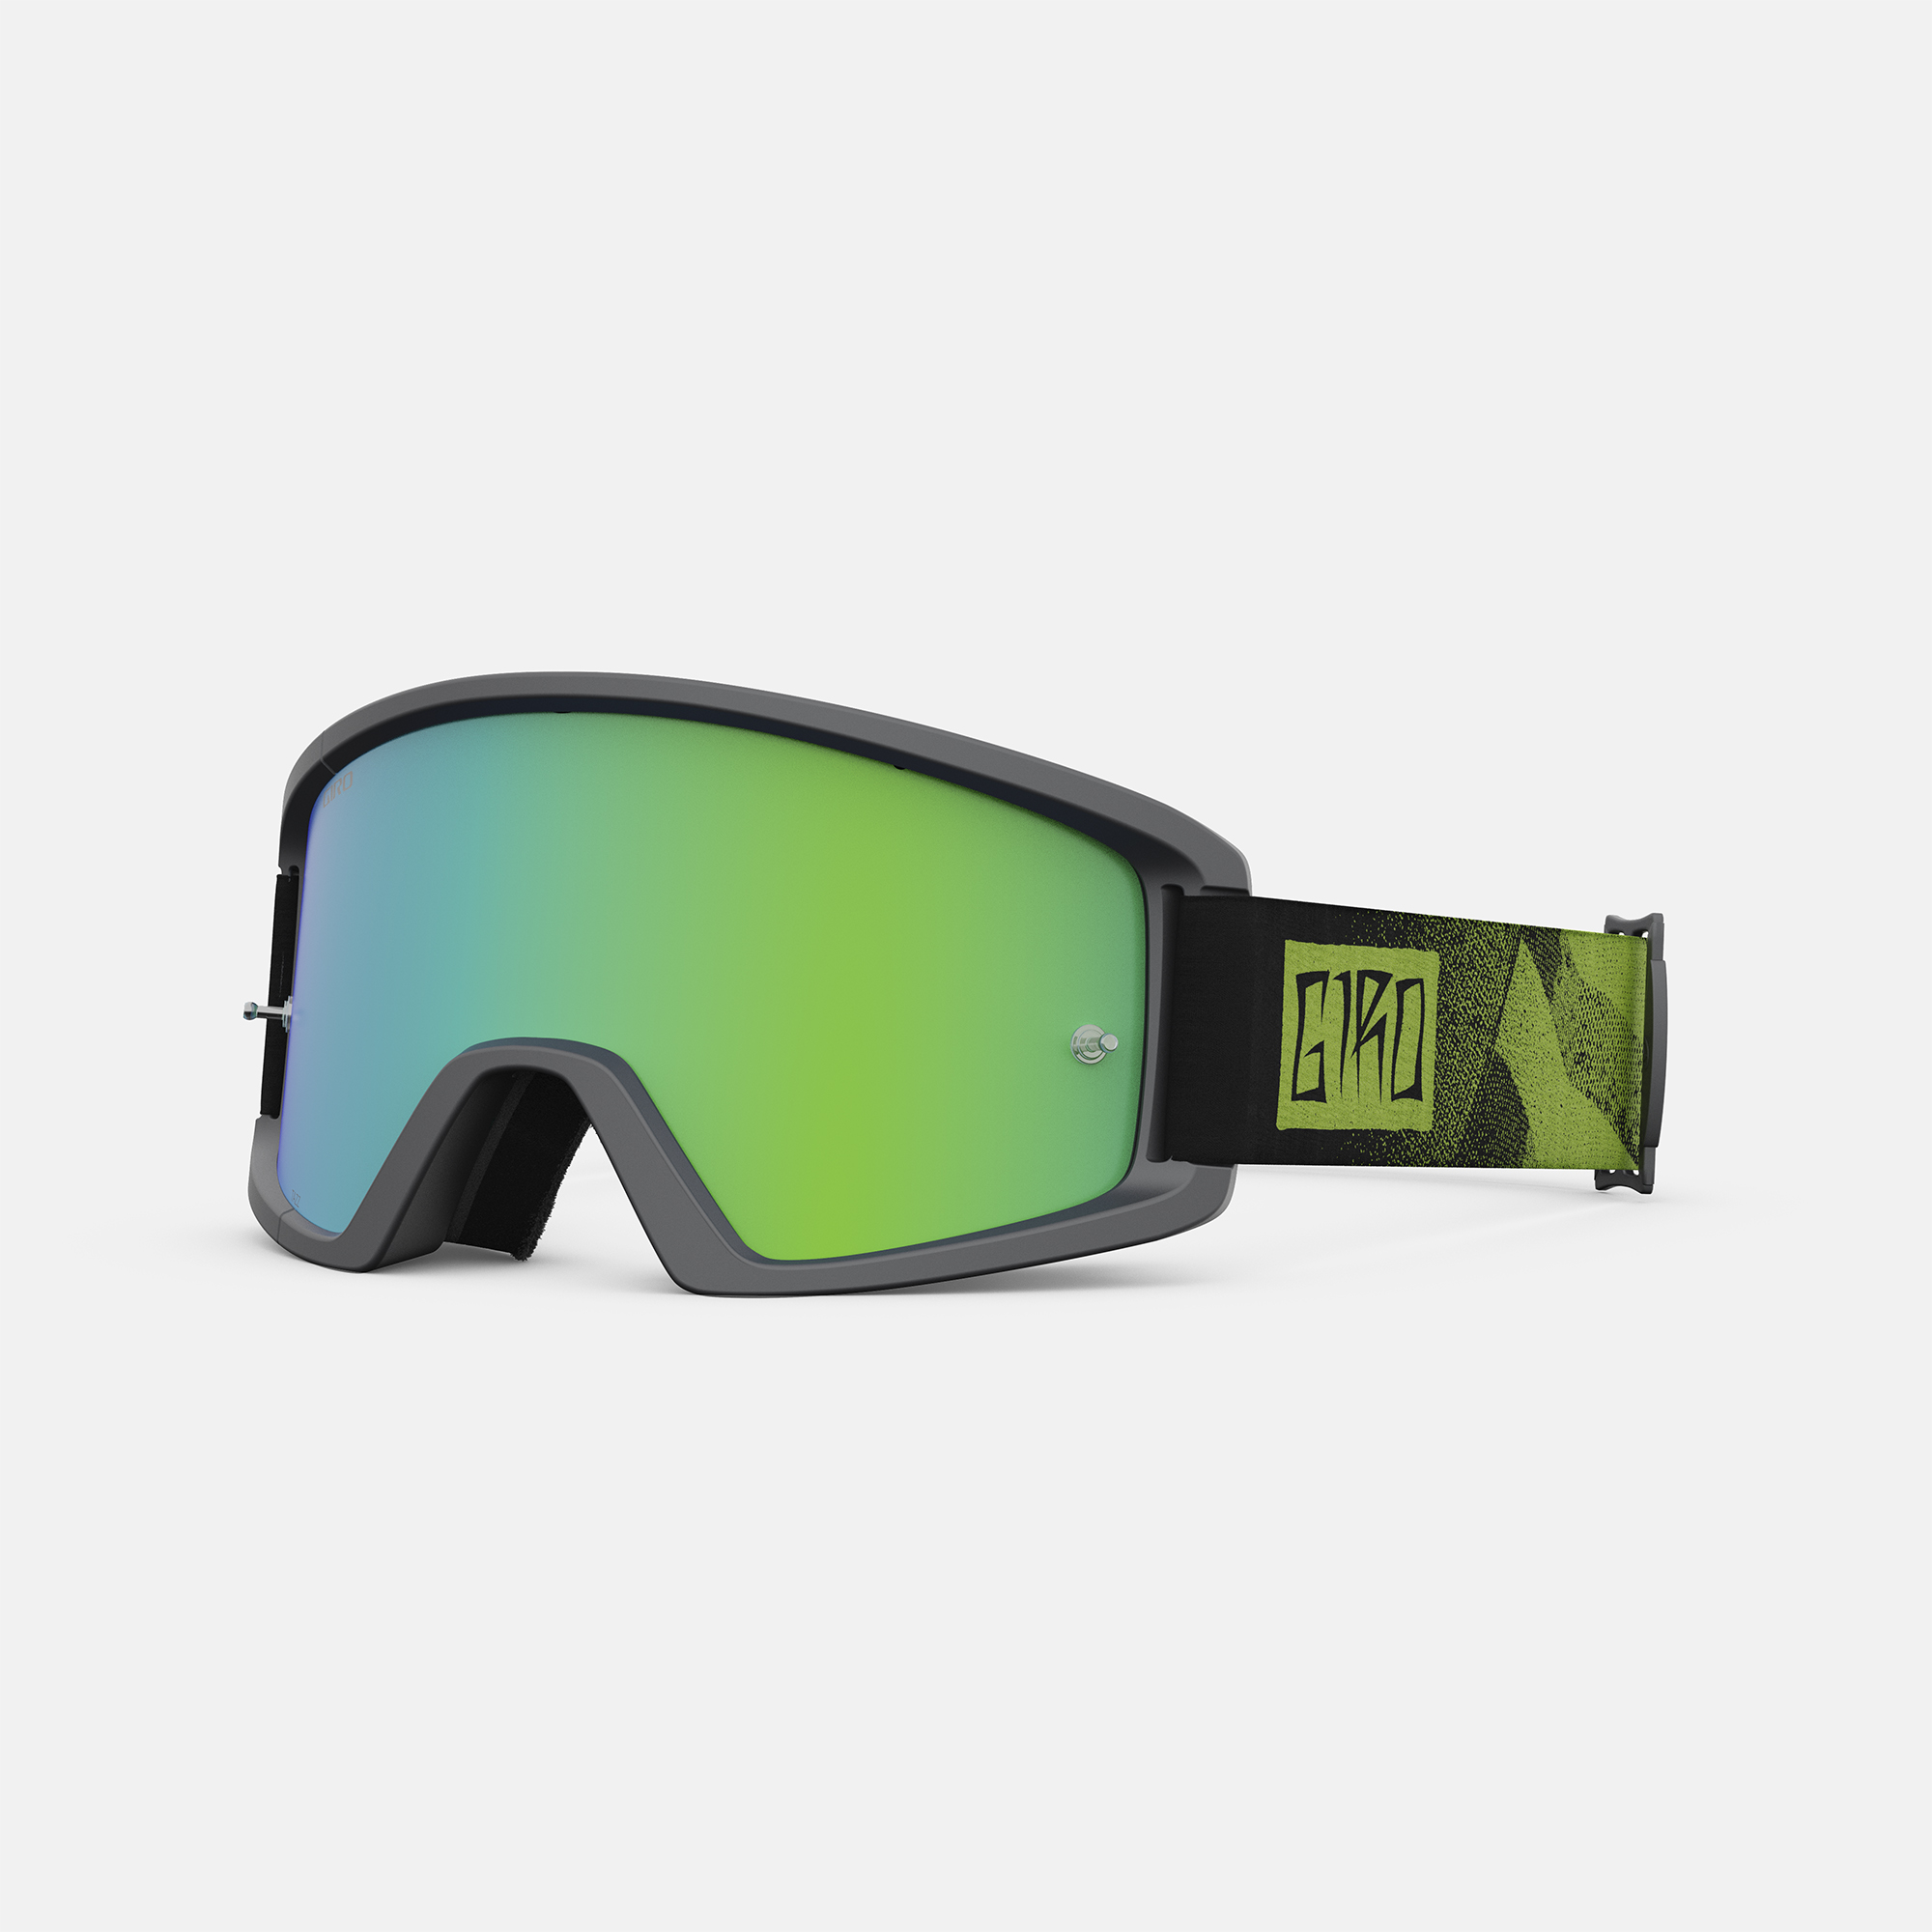 Giro Tazz MTB Unisex Dirt Mountain Cycling Goggles 